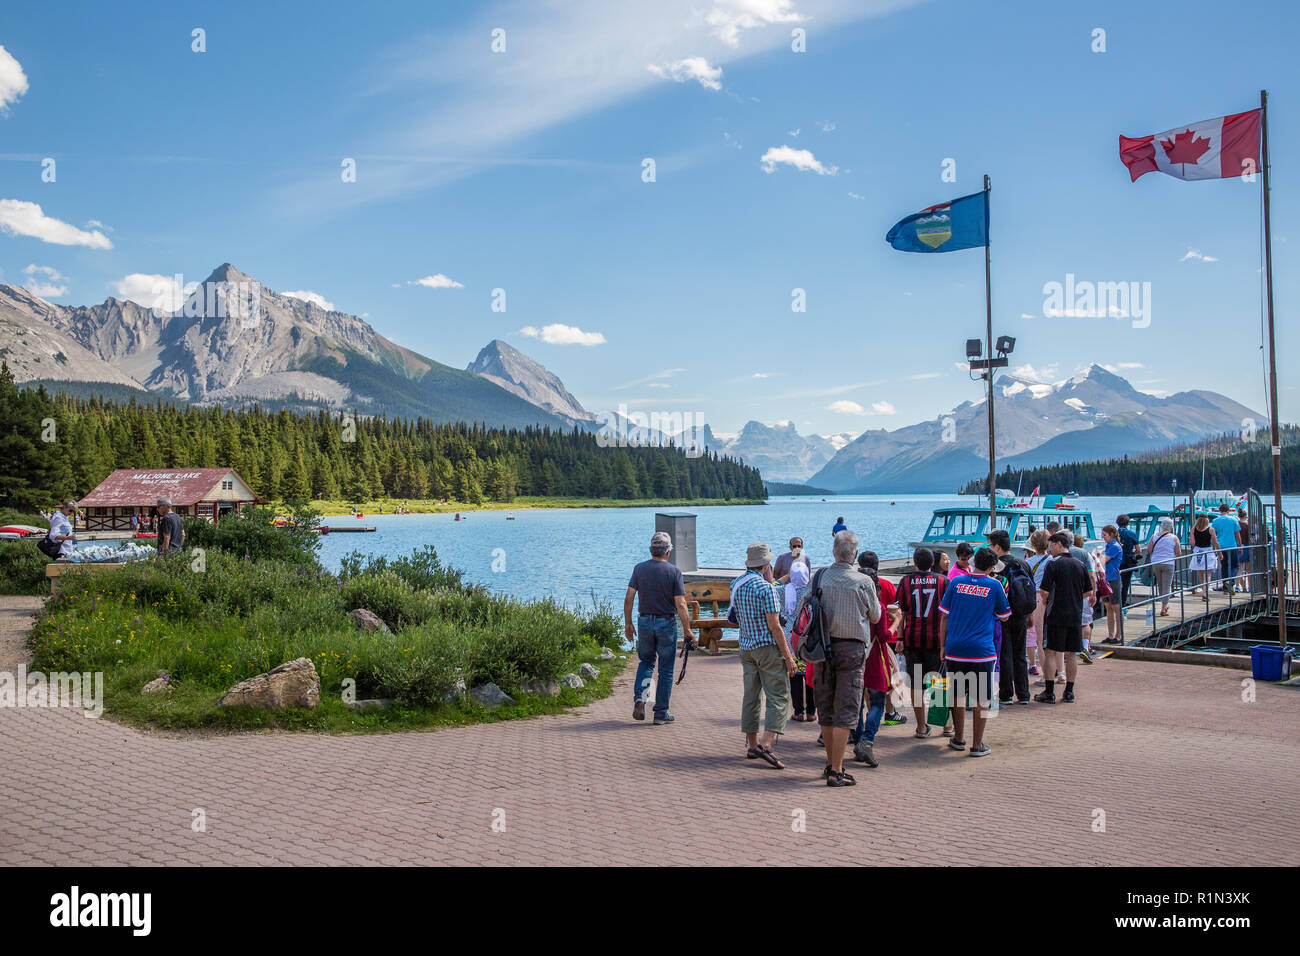 People preparing to board tour boats for Spirit Island on Maligne Lake in Jasper National Park, Alberta Canada Stock Photo